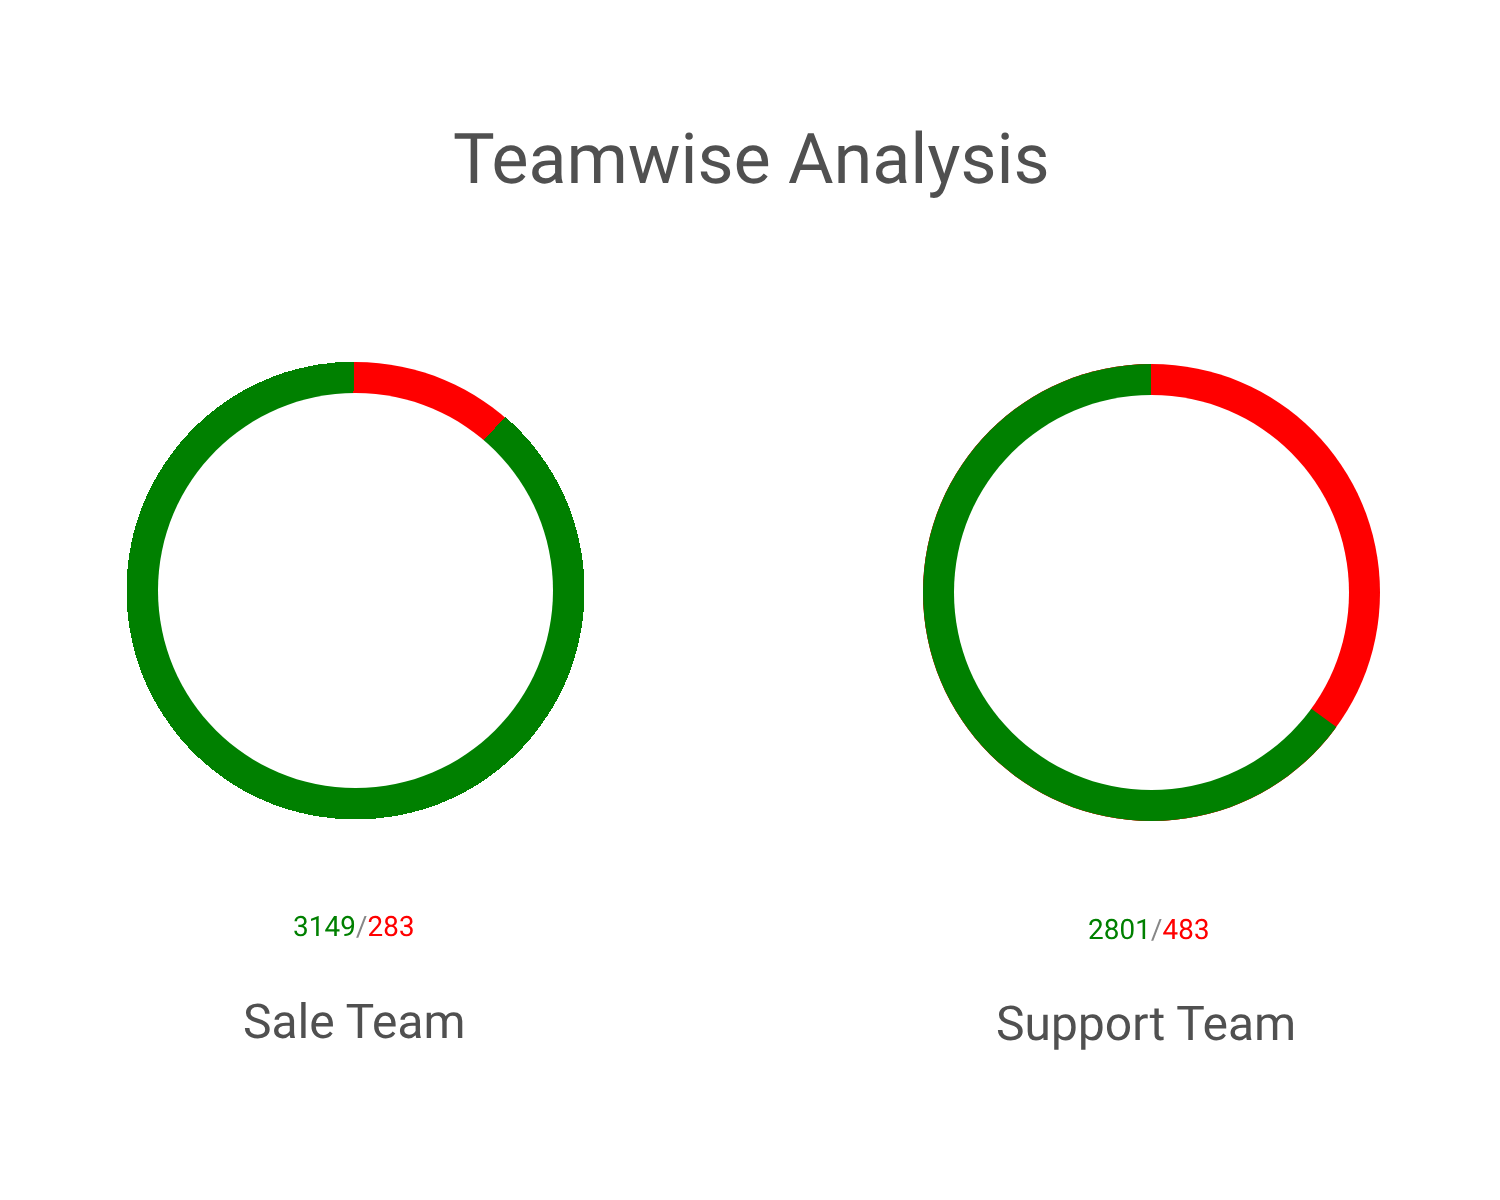 Team-wise Analysis